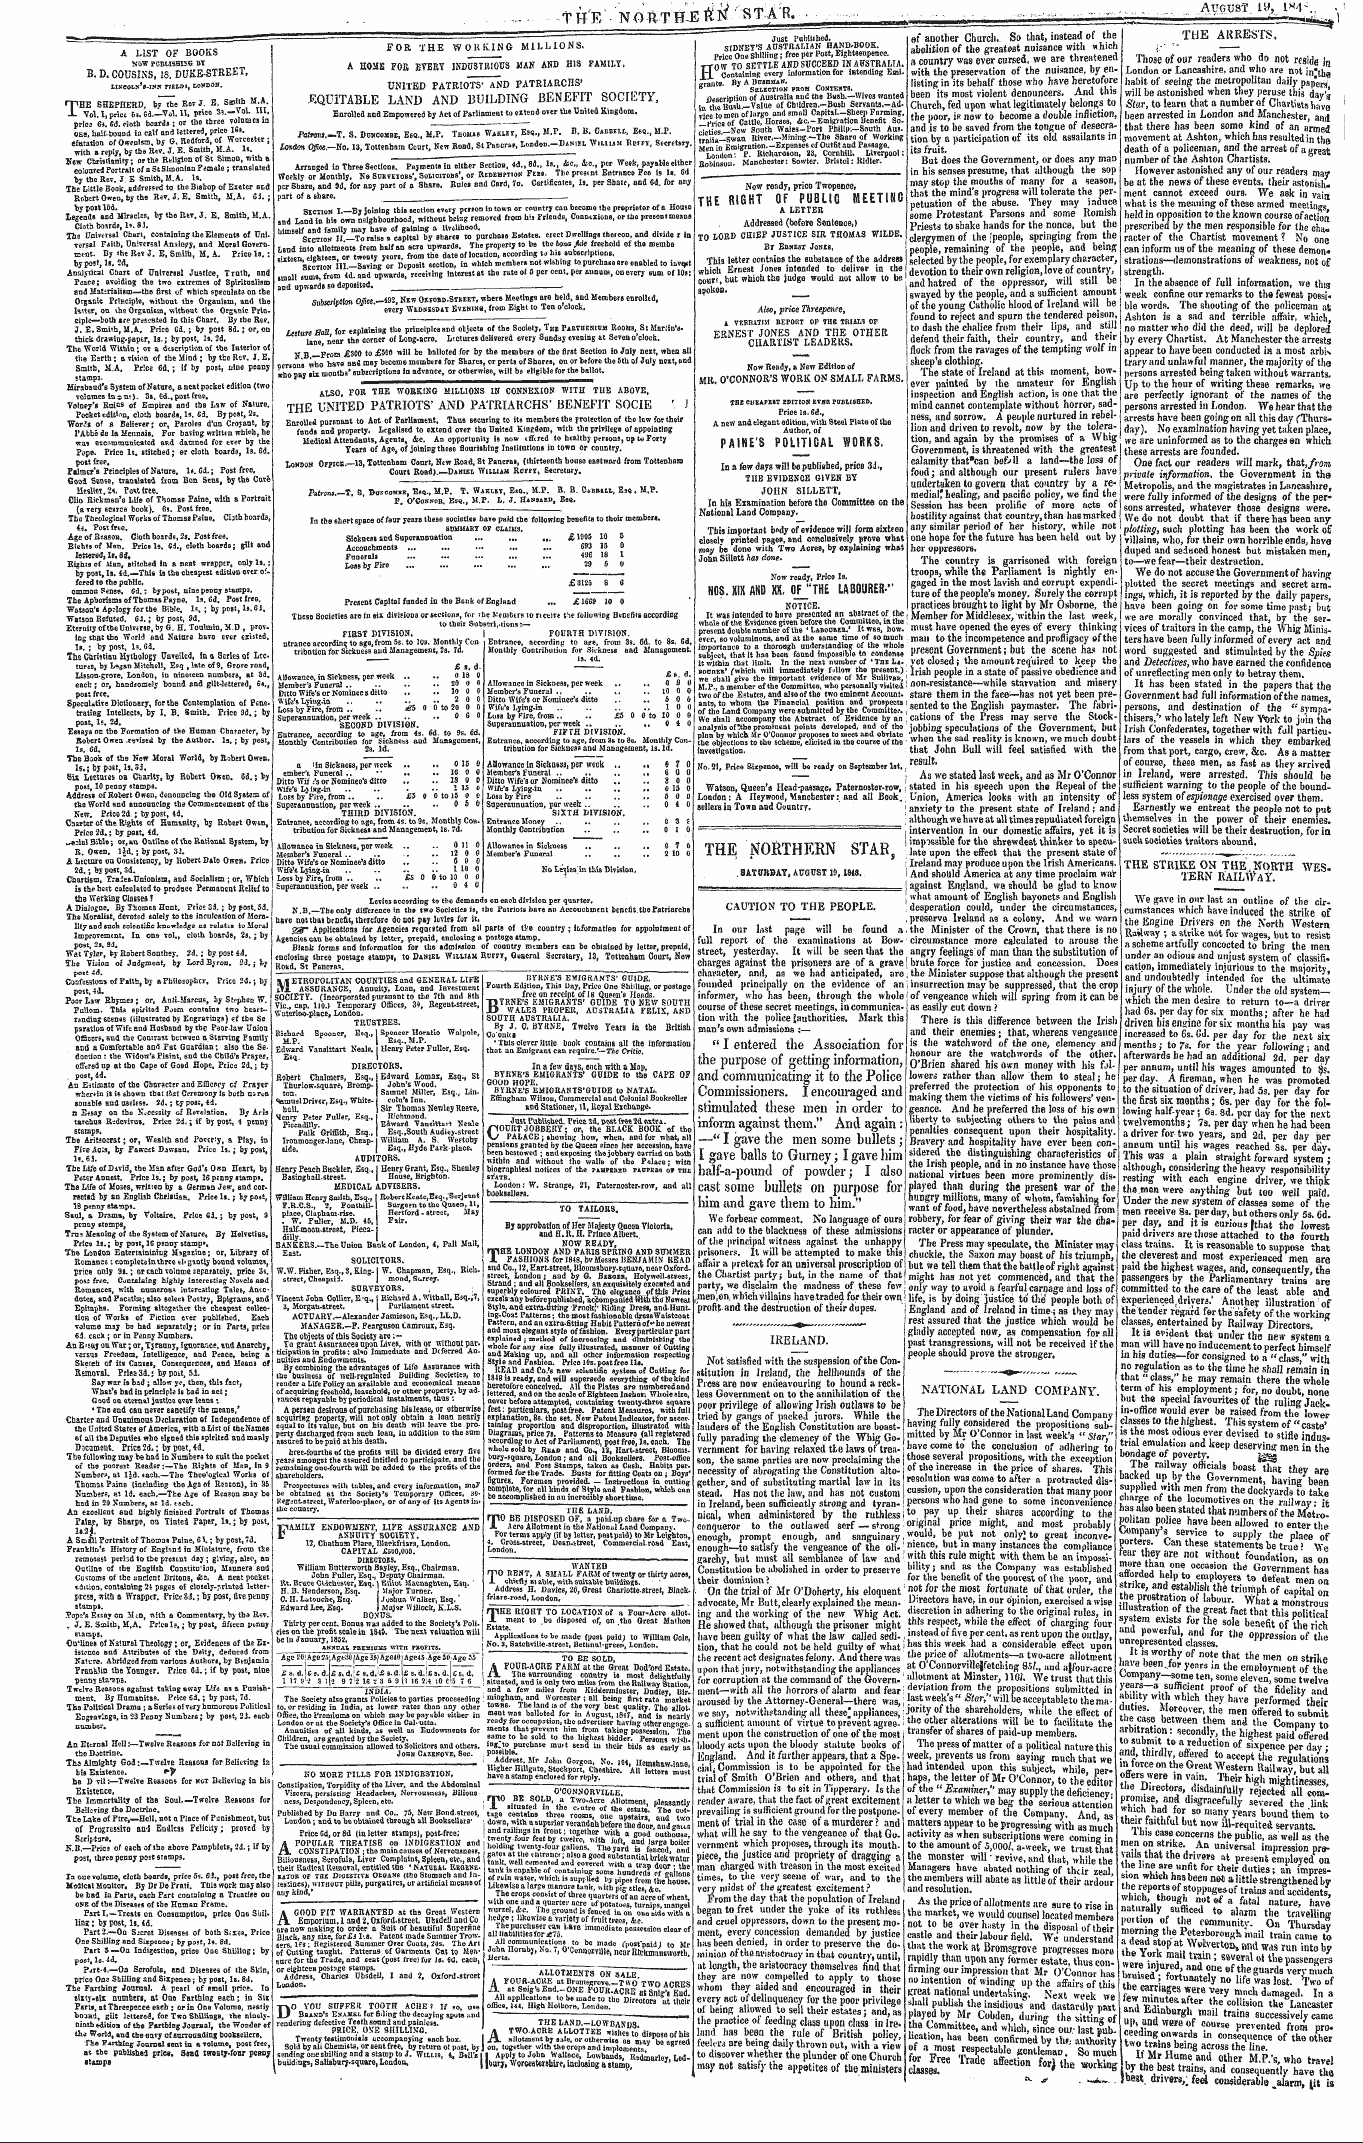 Northern Star (1837-1852): jS F Y, 3rd edition - Ad00413